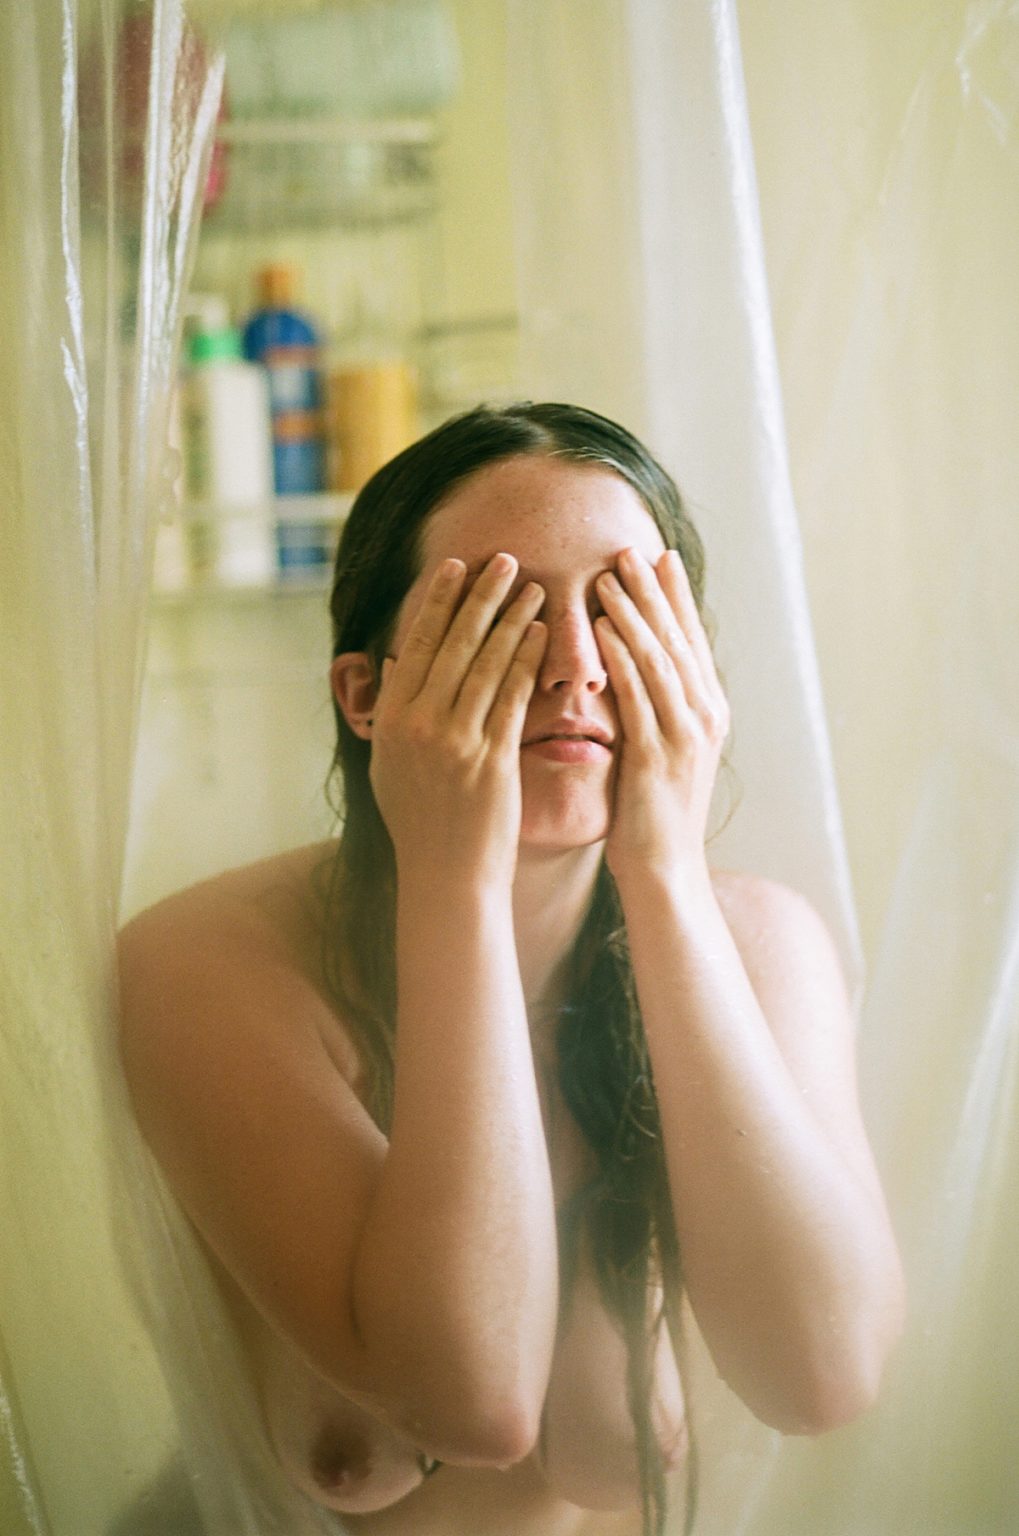 https://www.pressedflowersboudoir.com/wp-content/uploads/2022/04/nude-shower-boudoir-photography_1950-1019x1536.jpg